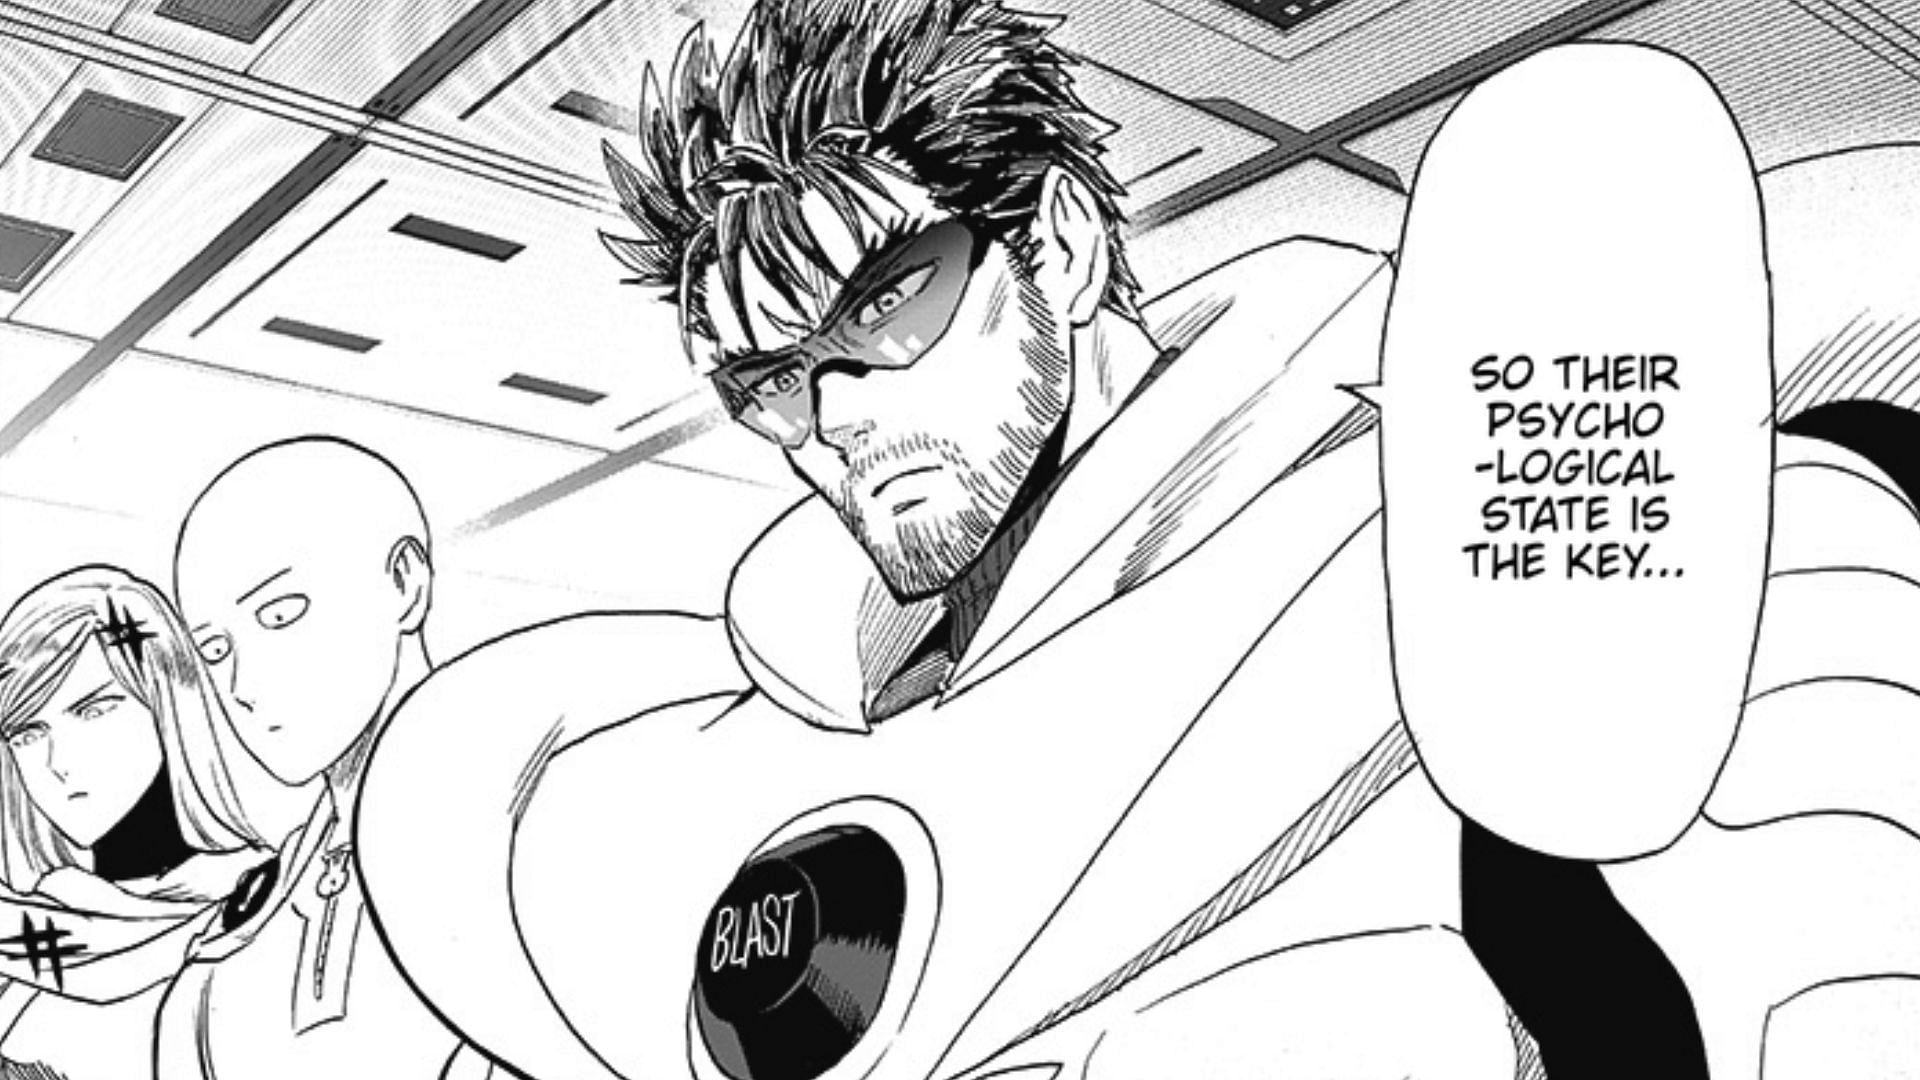 One Punch Man 👊🏻 Chapter 196, manga vs webcomic 🔥 #onepunchman #one